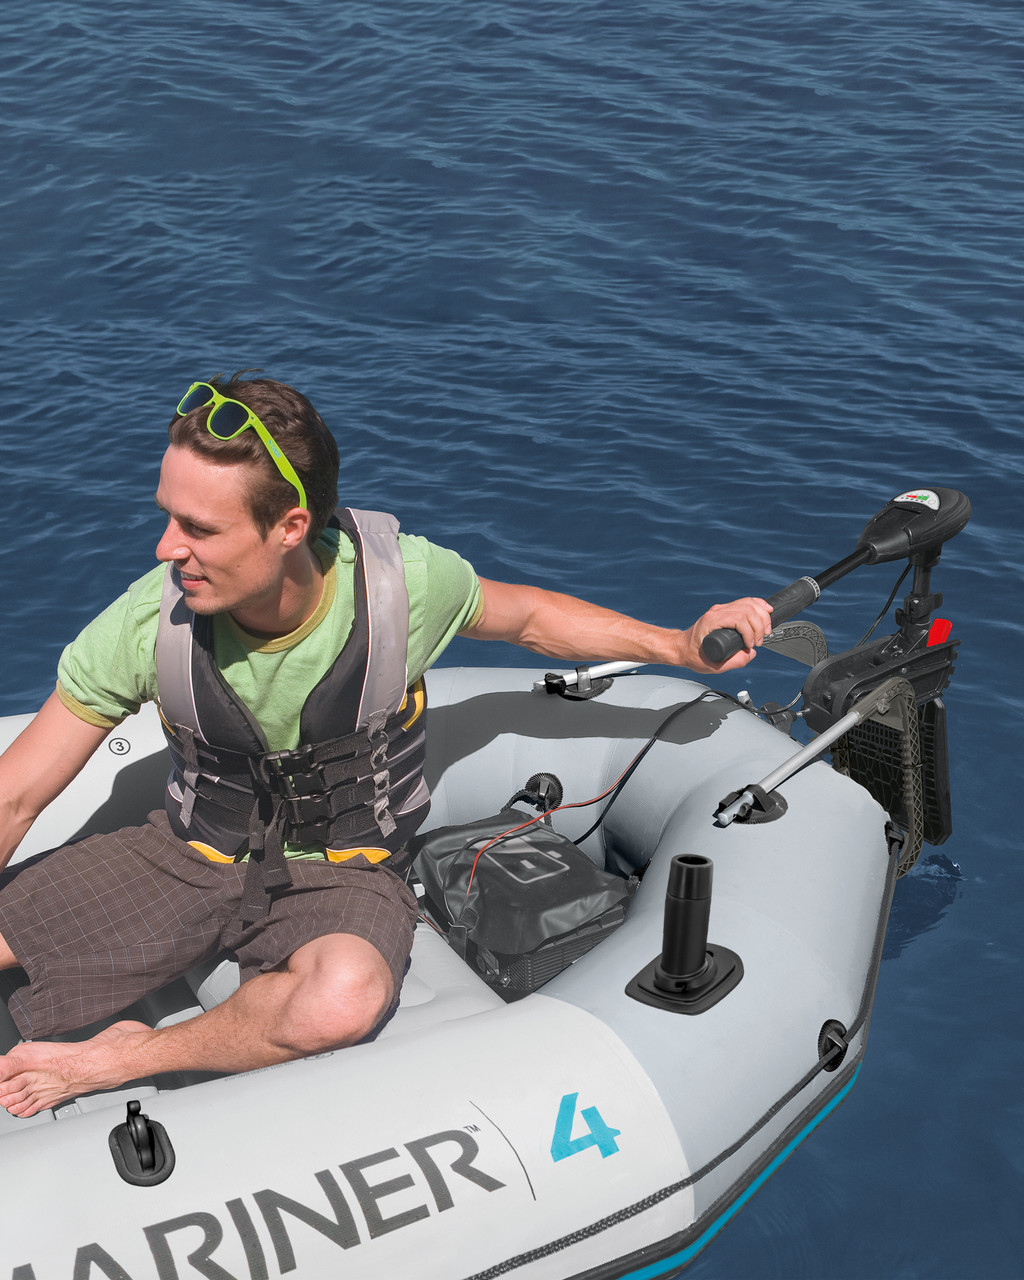 Intex Seahawk 4 Inflatable Boat Set Trolling Motor And Bracket